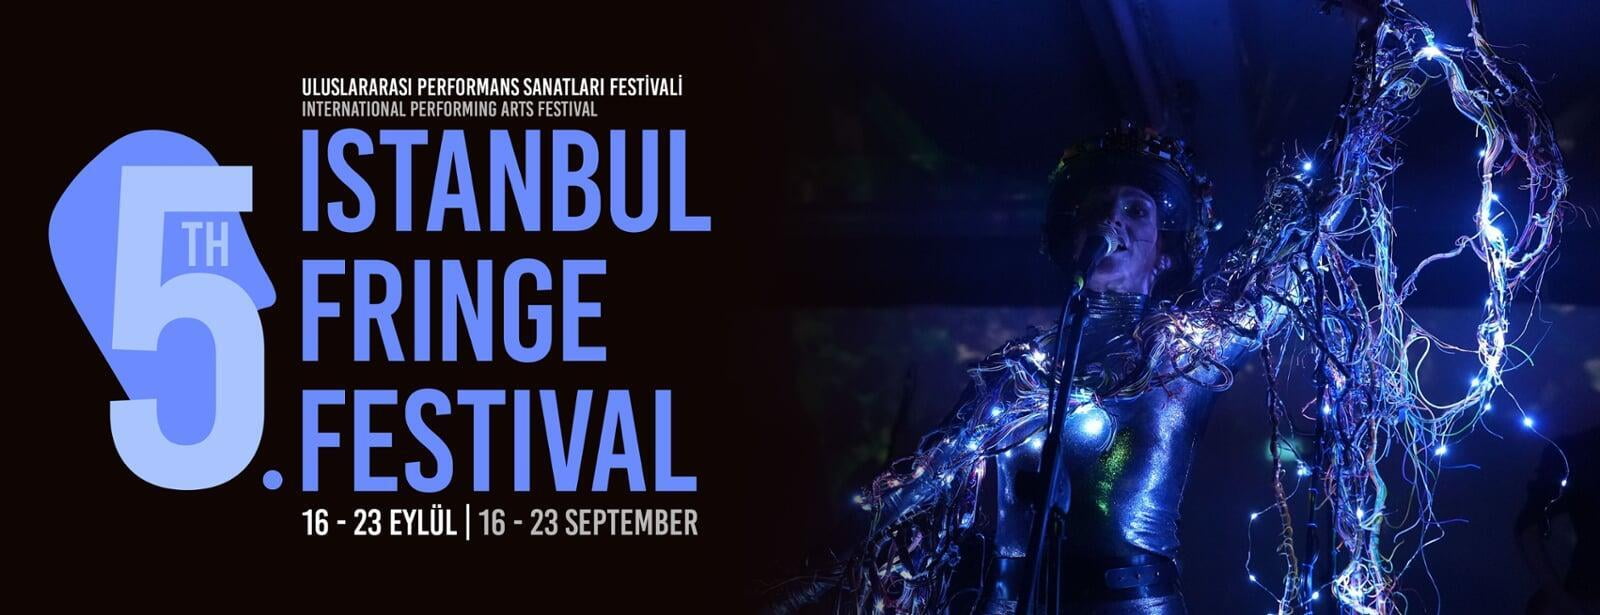 istanbul-fringe-festival-1229